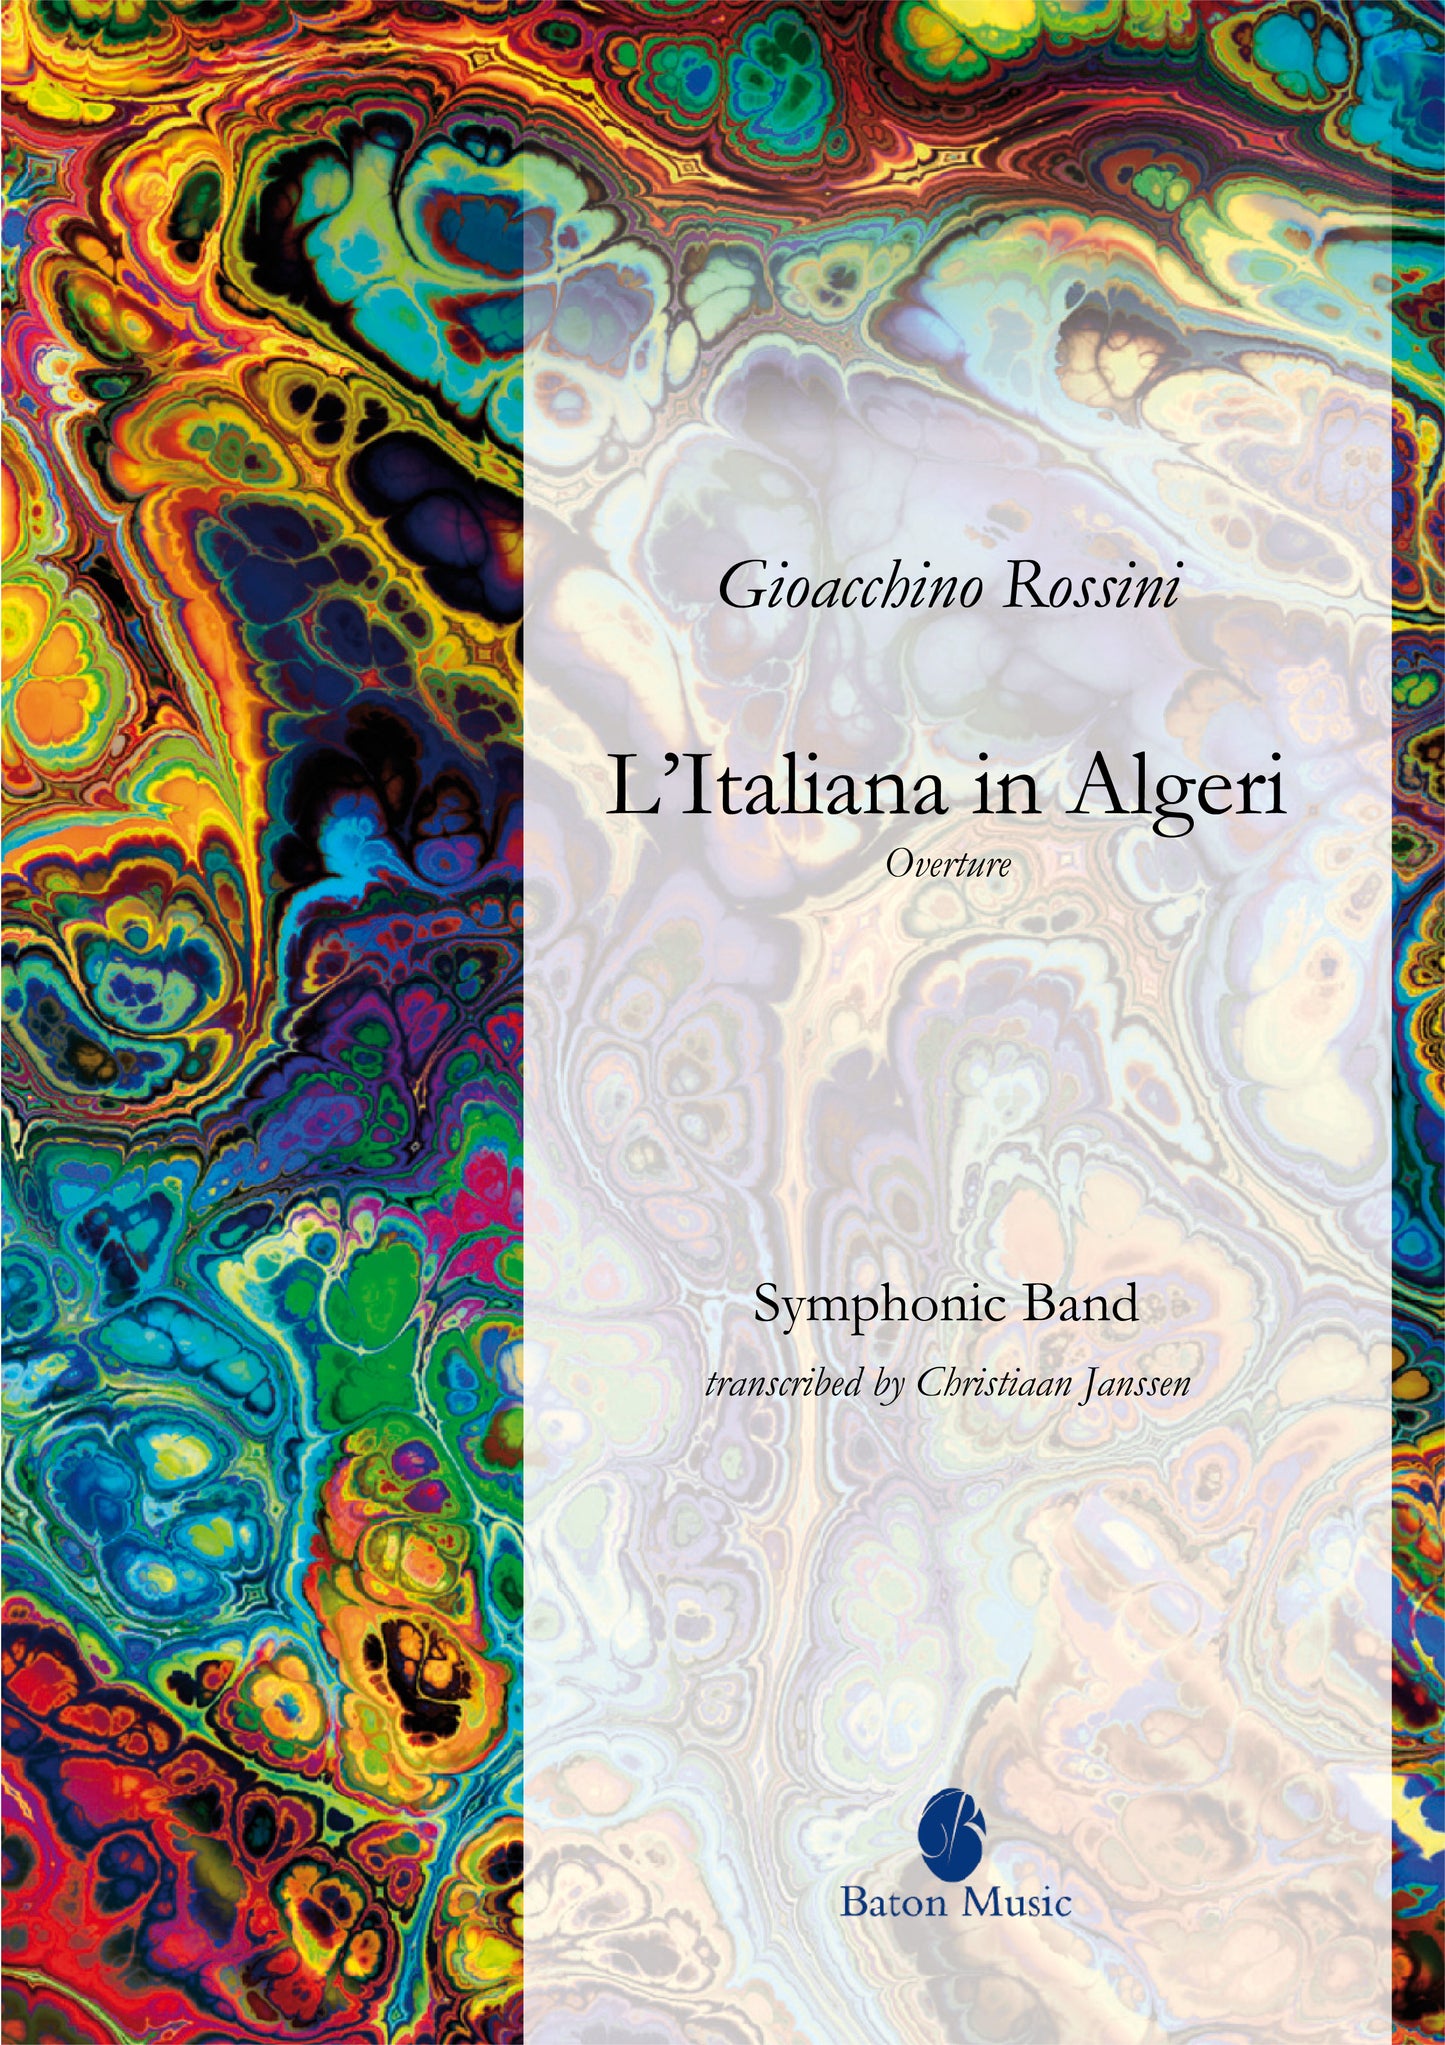 L'Italiana in Algeri (Overture) - G. Rossini